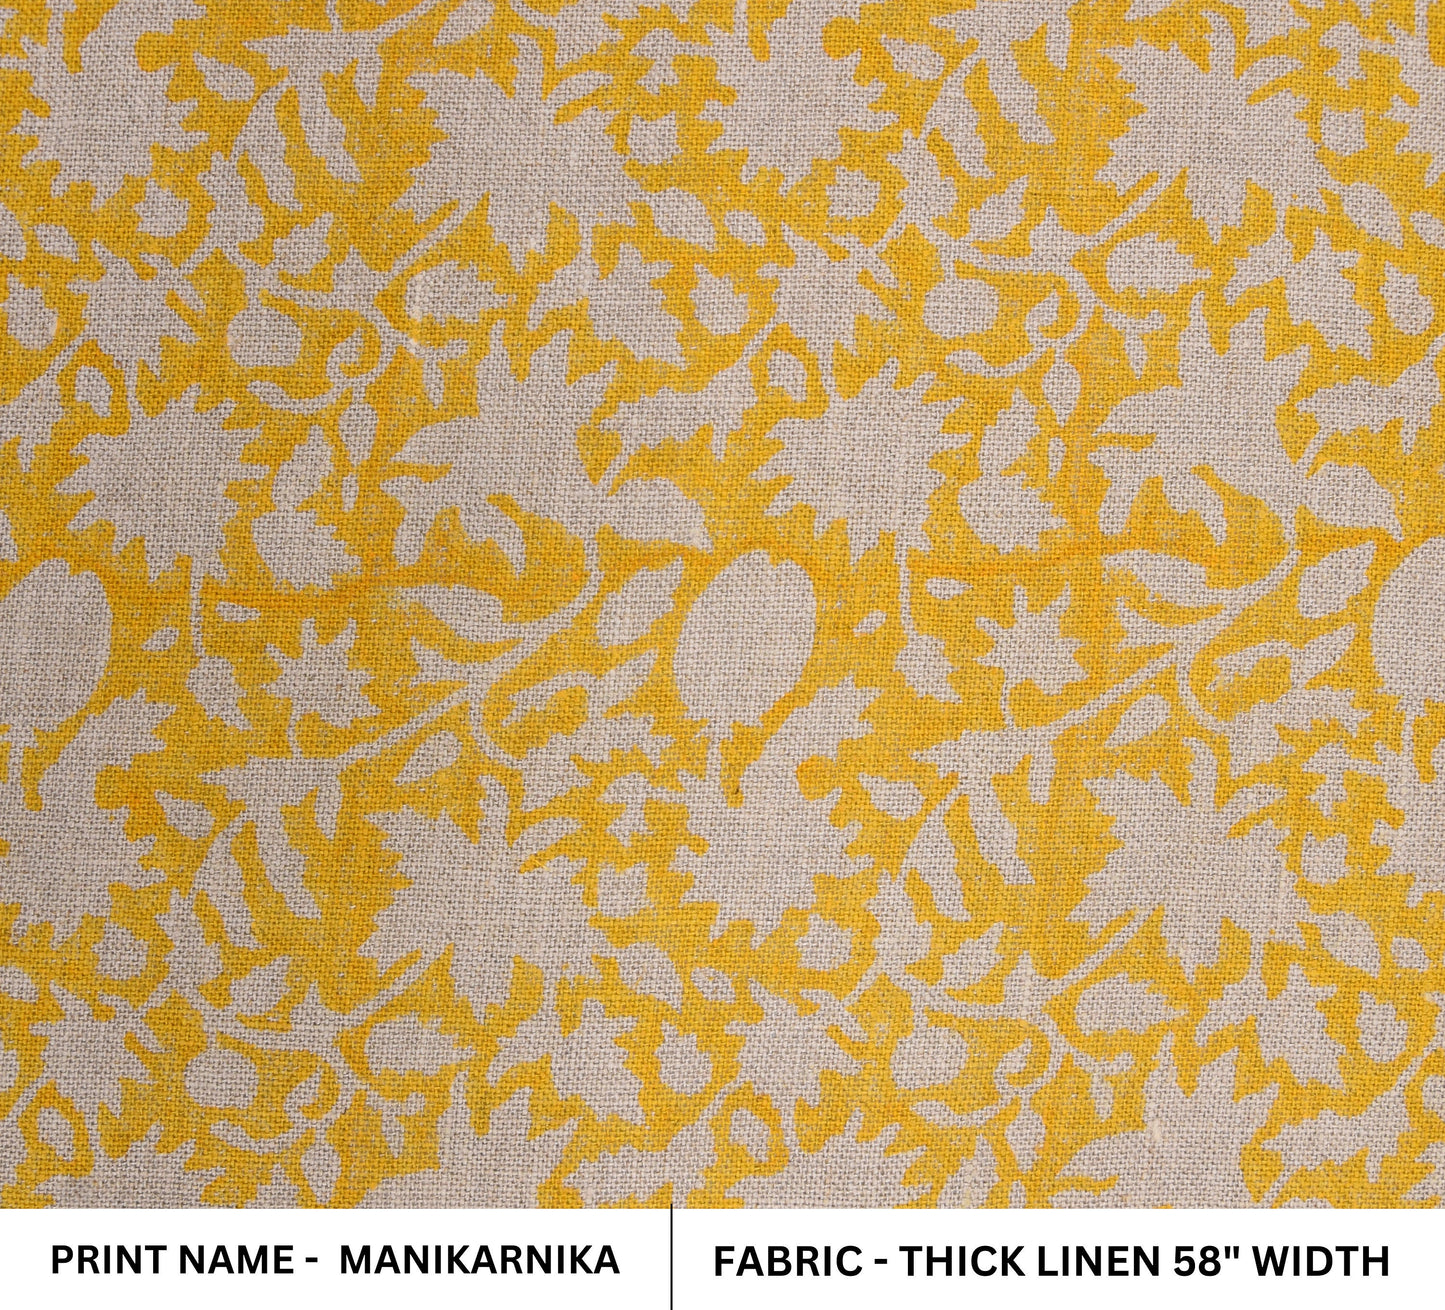 Block print Thick linen fabric fabritual